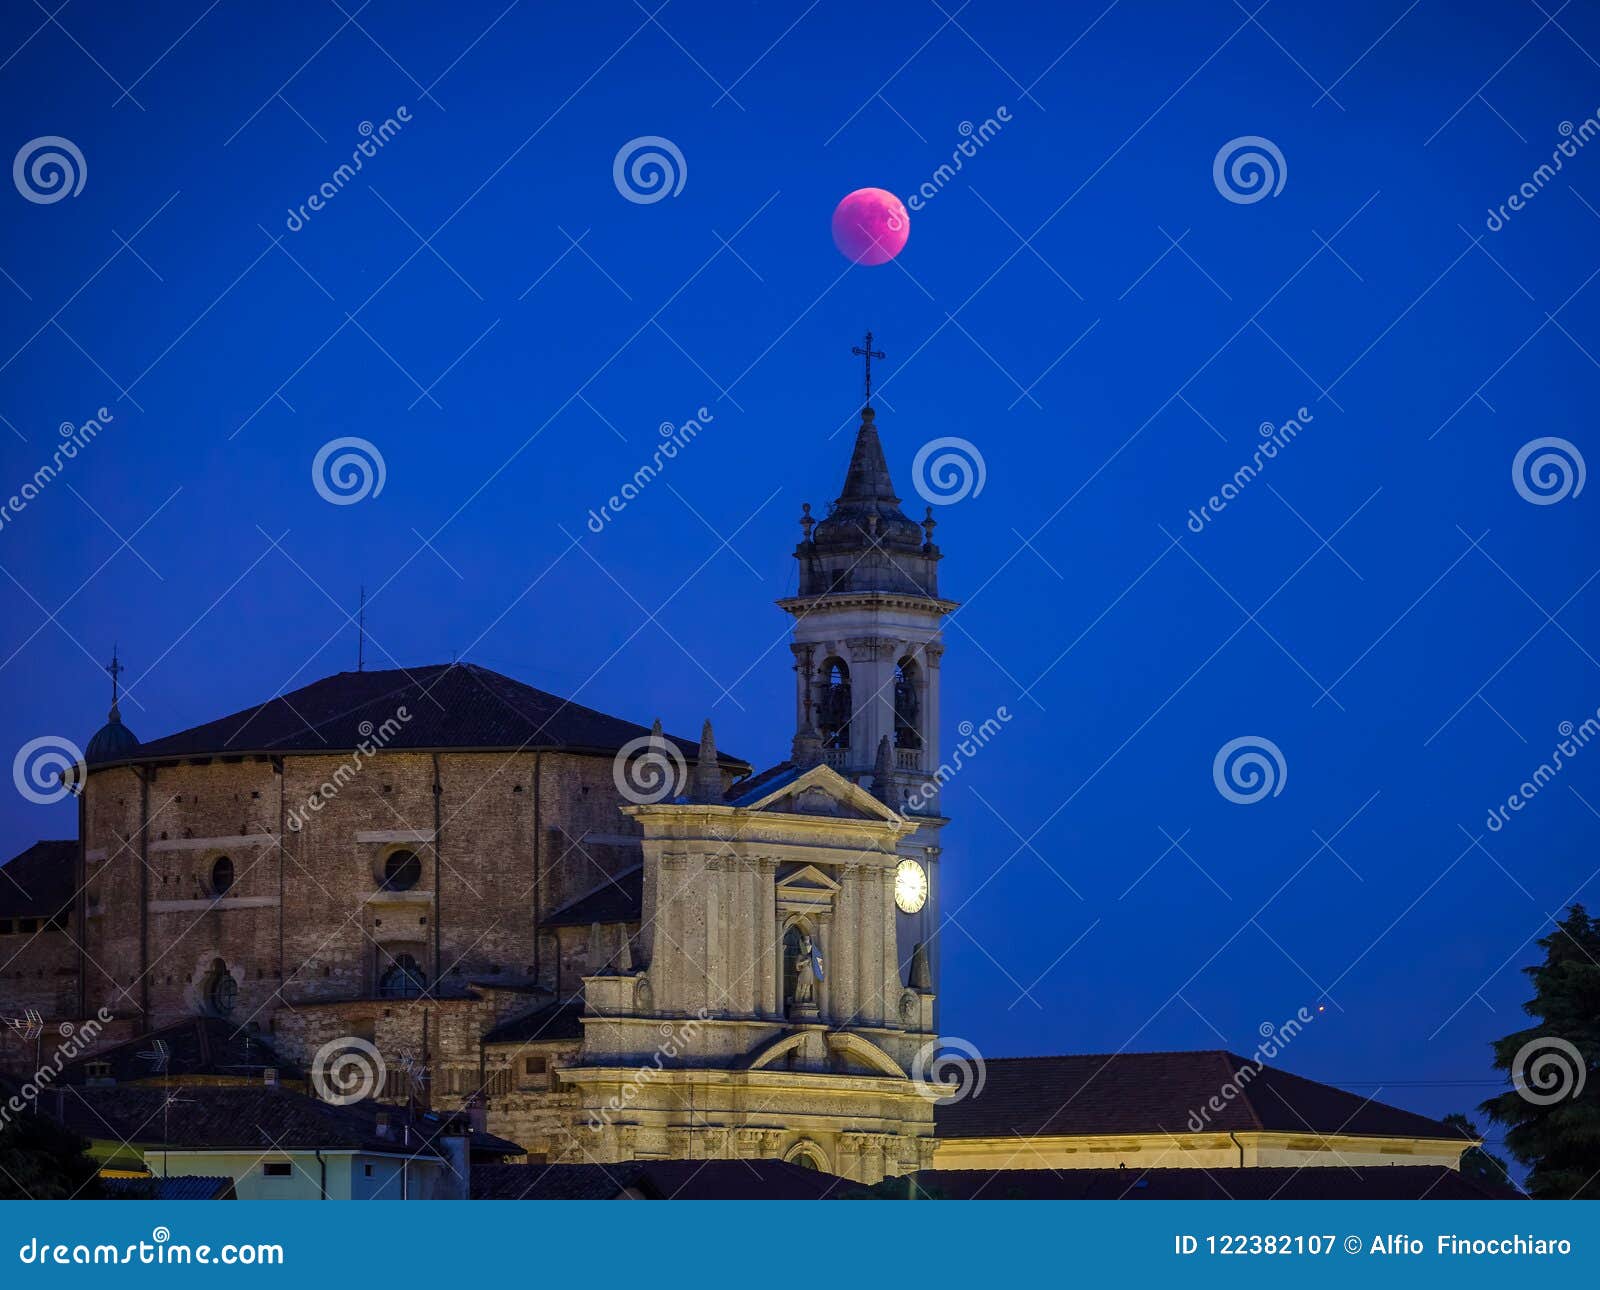 apocalyptic red moon eclipse over the church of trezzo sull`adda